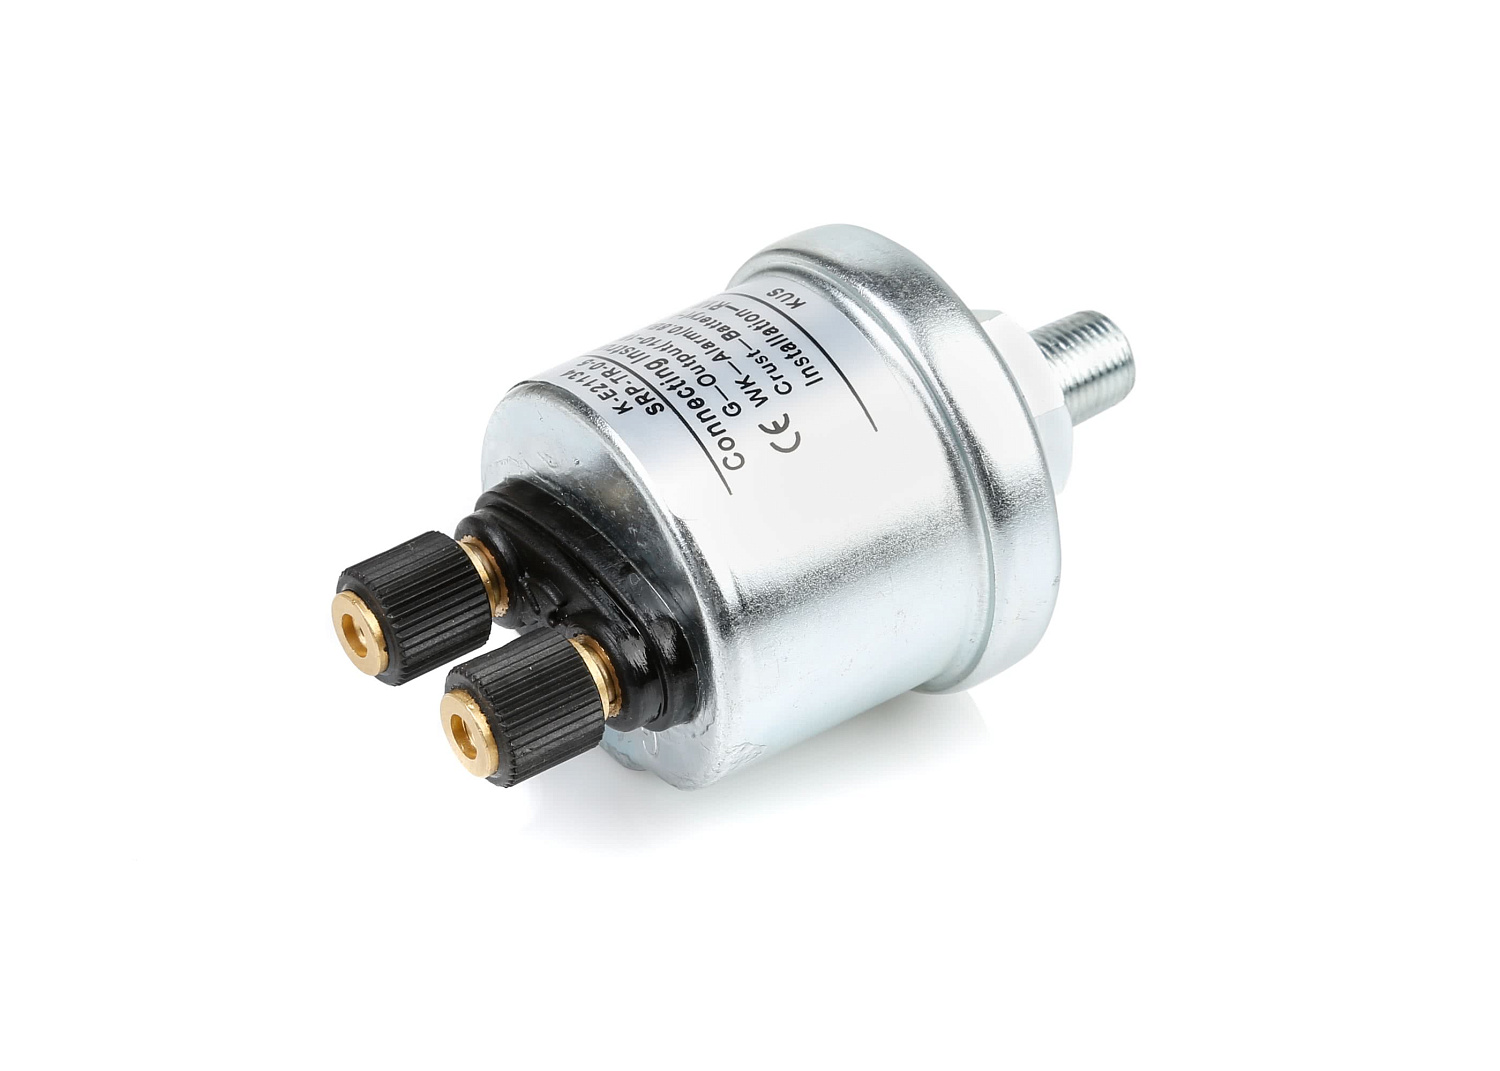 KUS Oil Pressure Sensor 0-5 bar / 10-184 ohm; with alarm